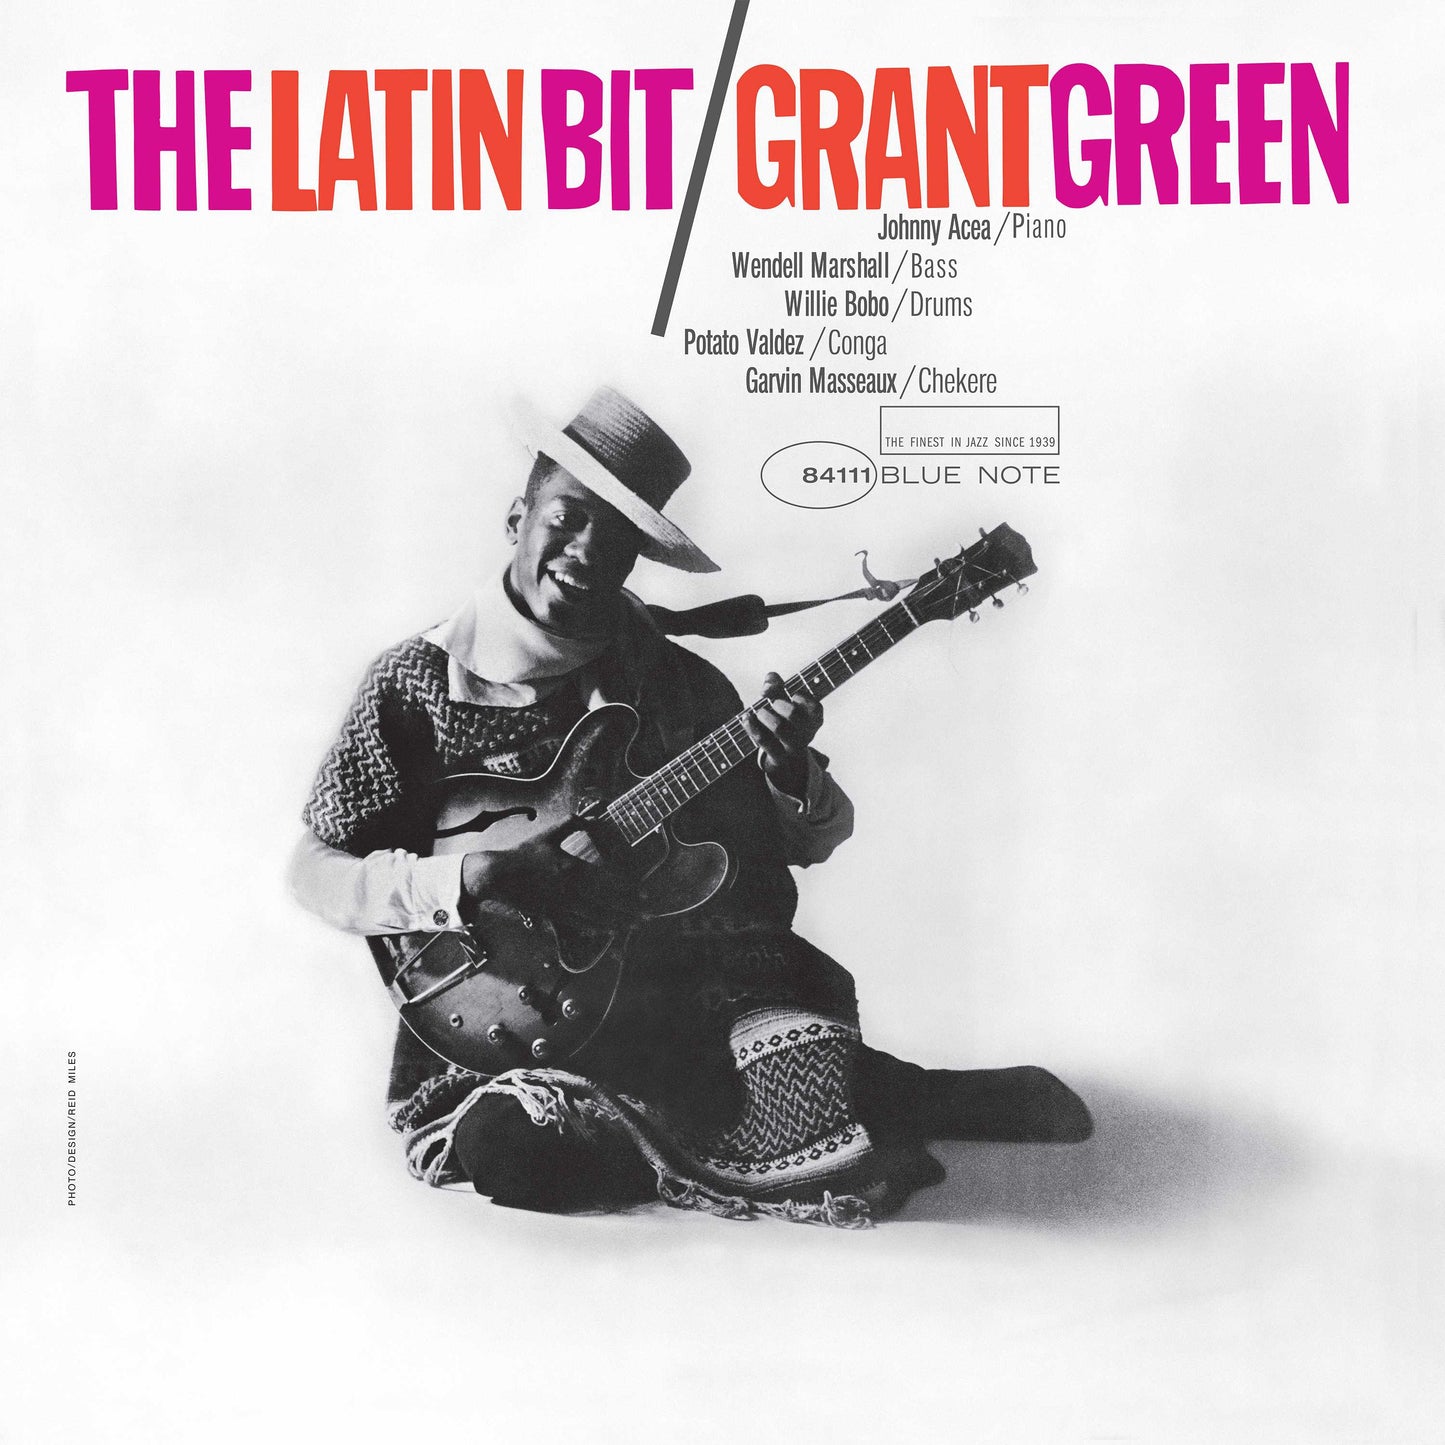 Grant Green - The Latin Bit - Tone Poet LP